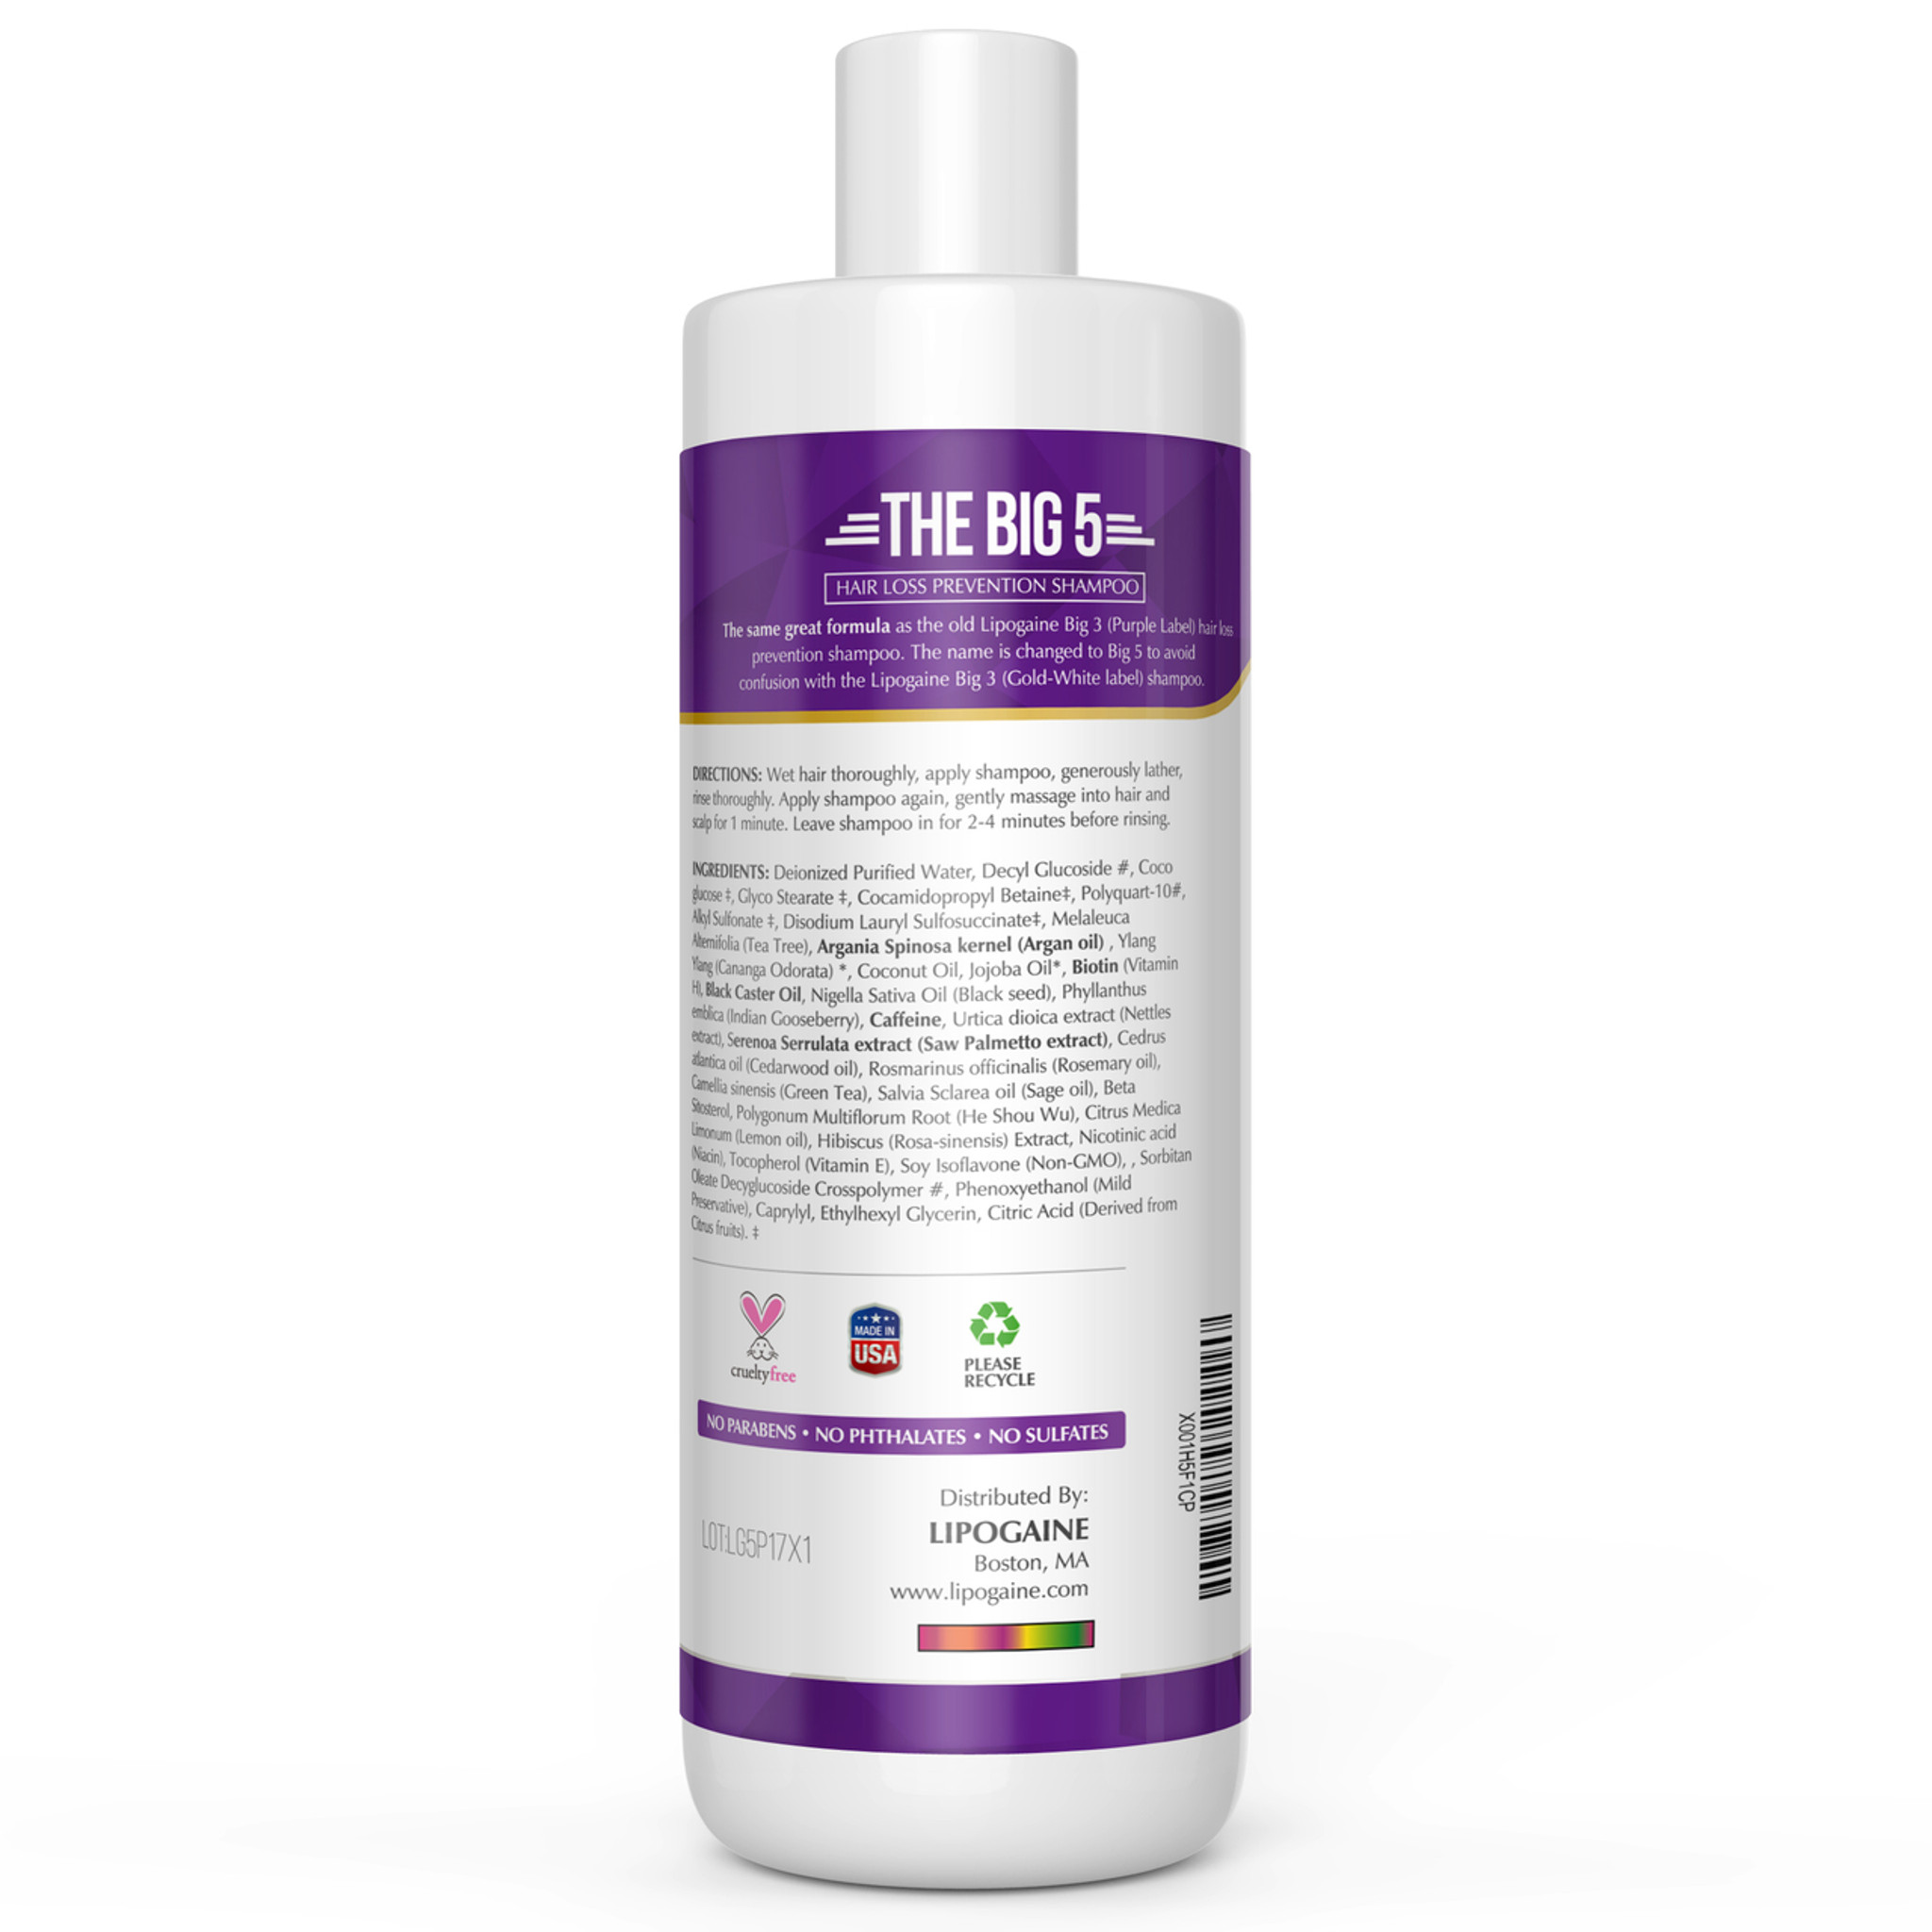 Lipogaine Big 5 Shampoo Label) | Site